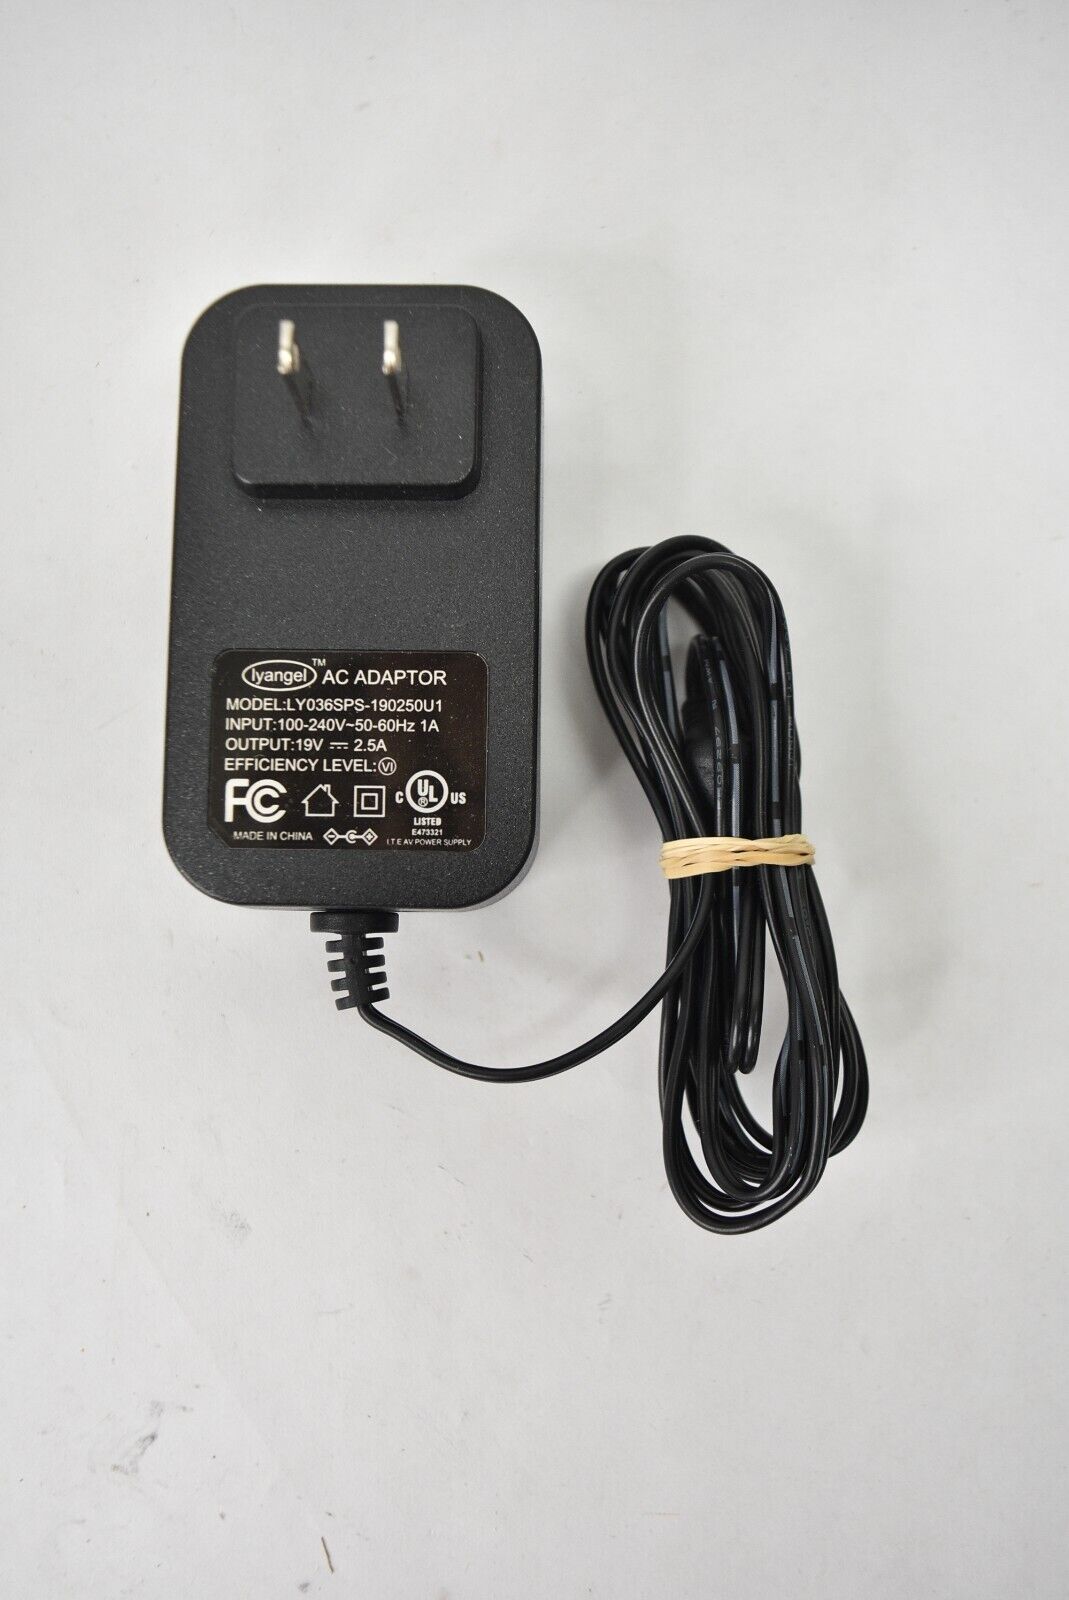 Lyangel AC Adapter Power Supply Unit LY036SPS-190250U1 19V 2.5A Brand: Lyangel Type: Adapter O - Click Image to Close